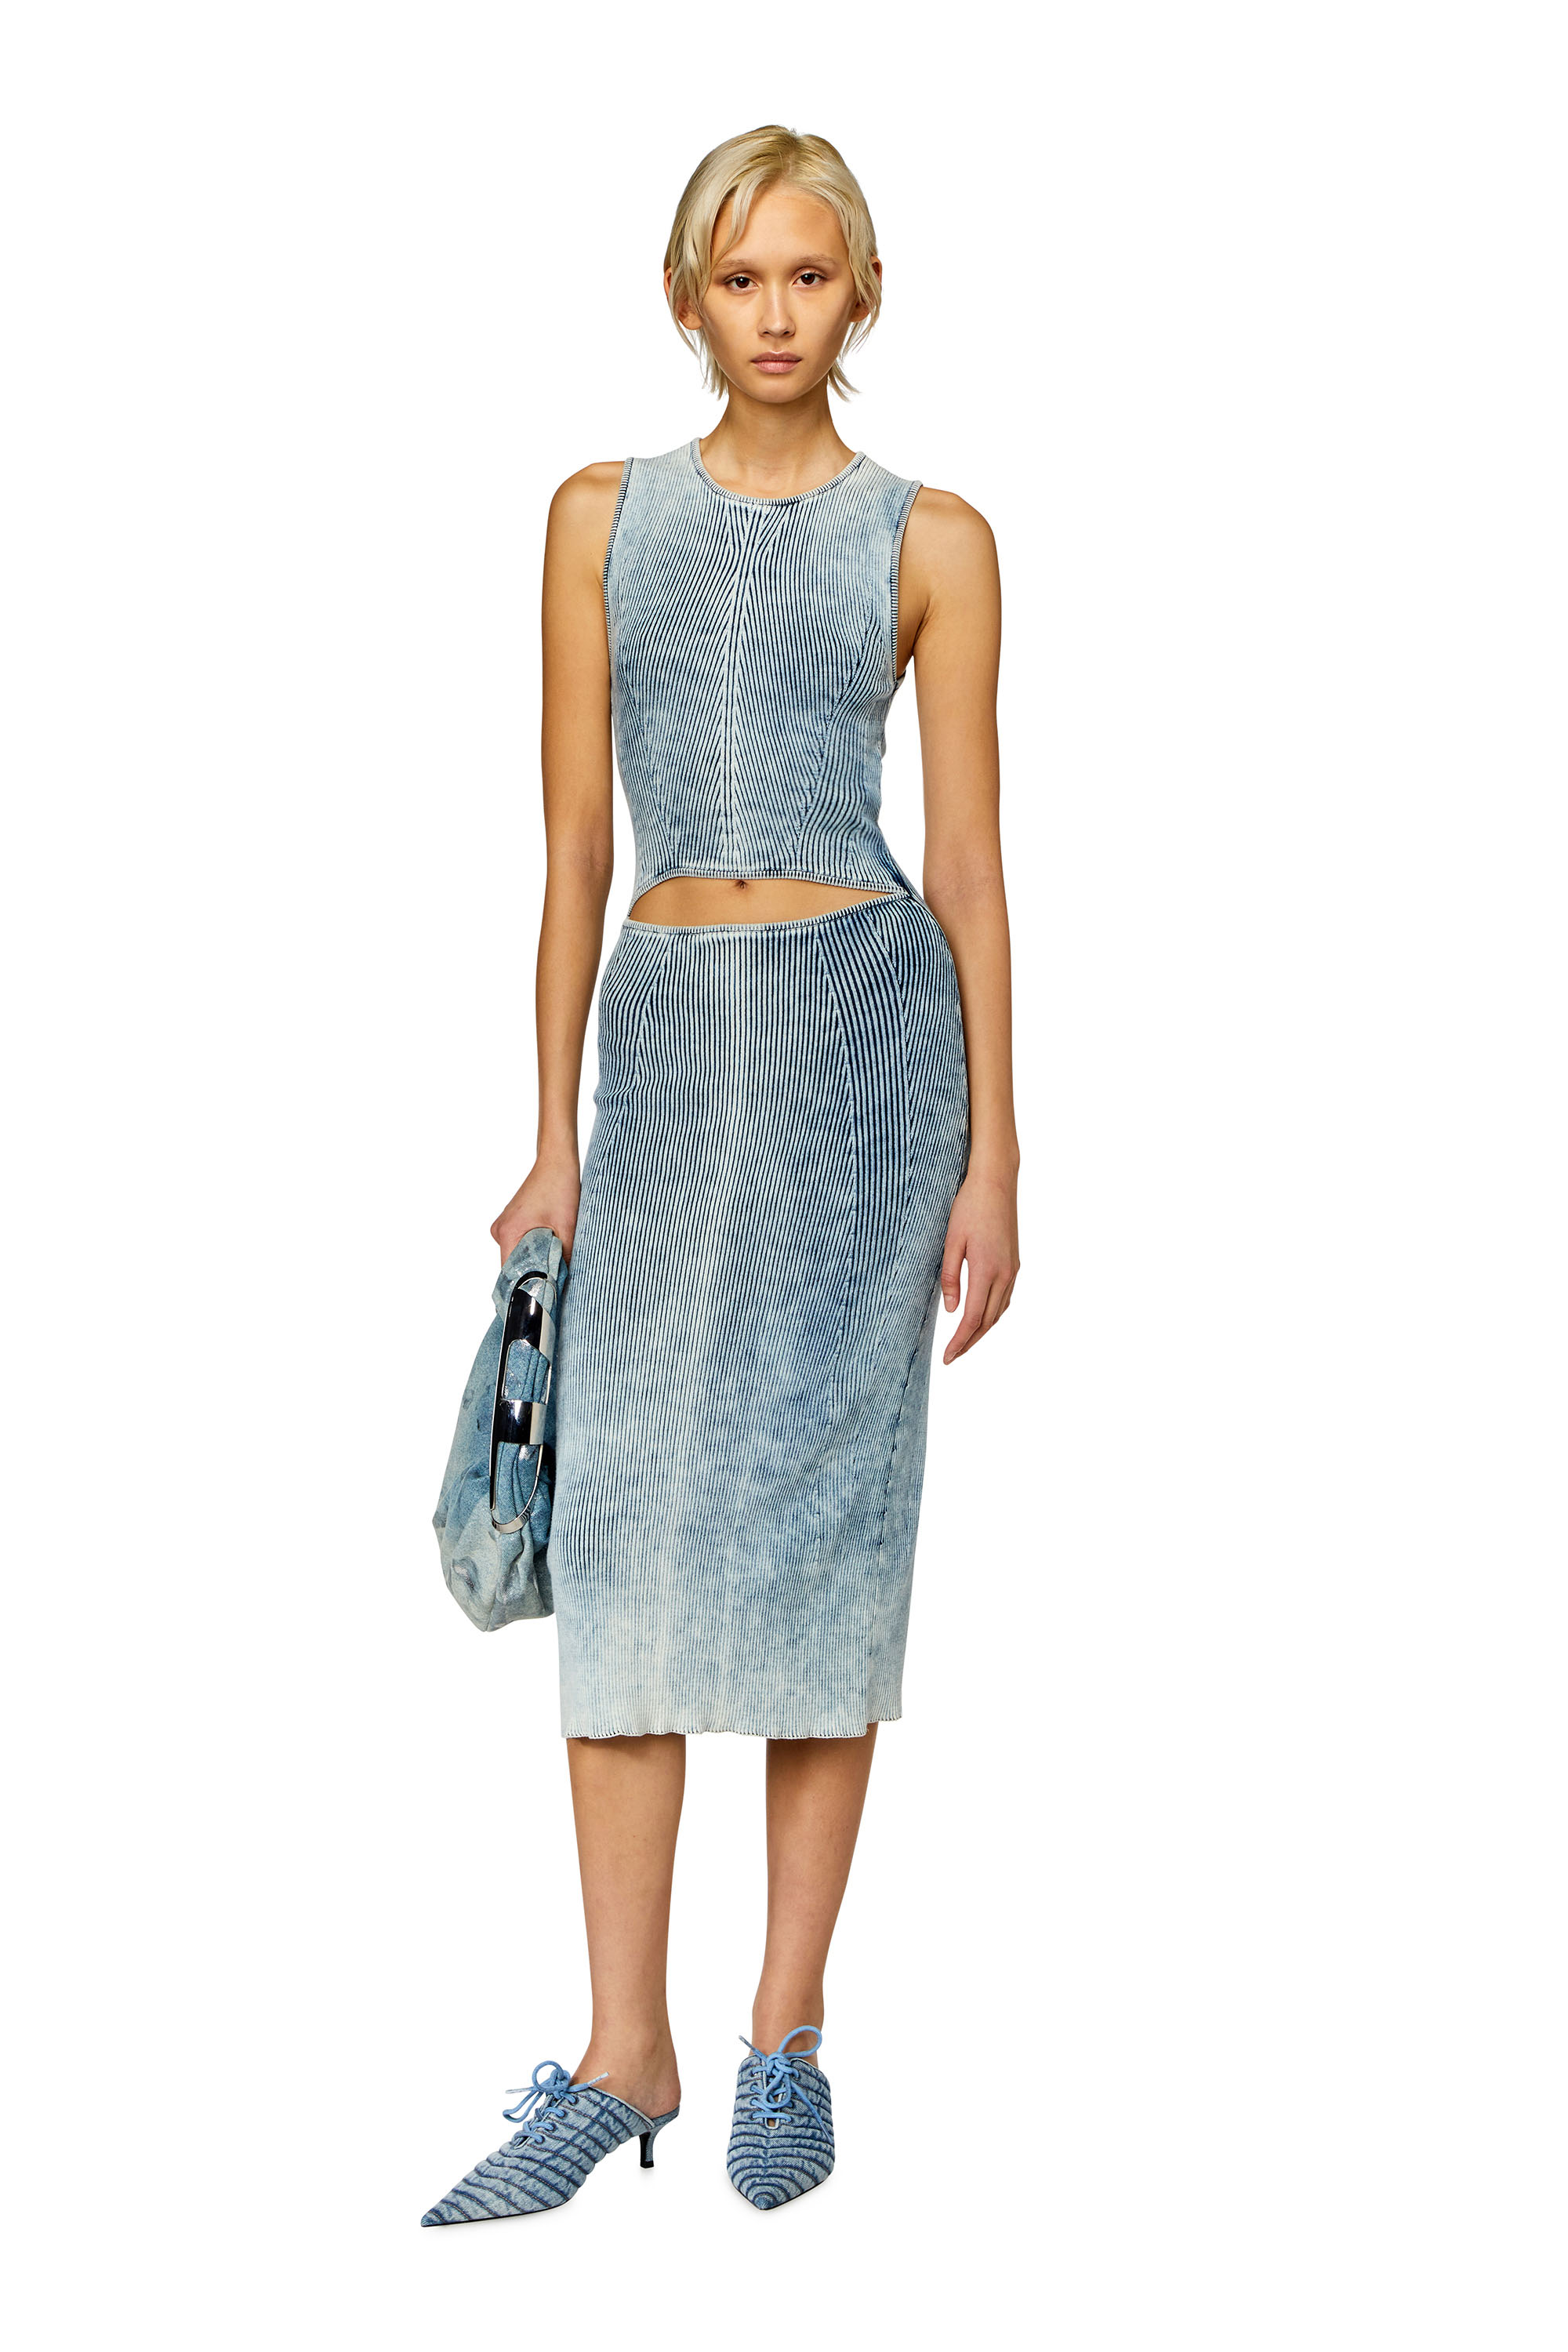 Diesel - M-TARYN, Woman Cut-out midi dress in indigo cotton knit in Blue - Image 1